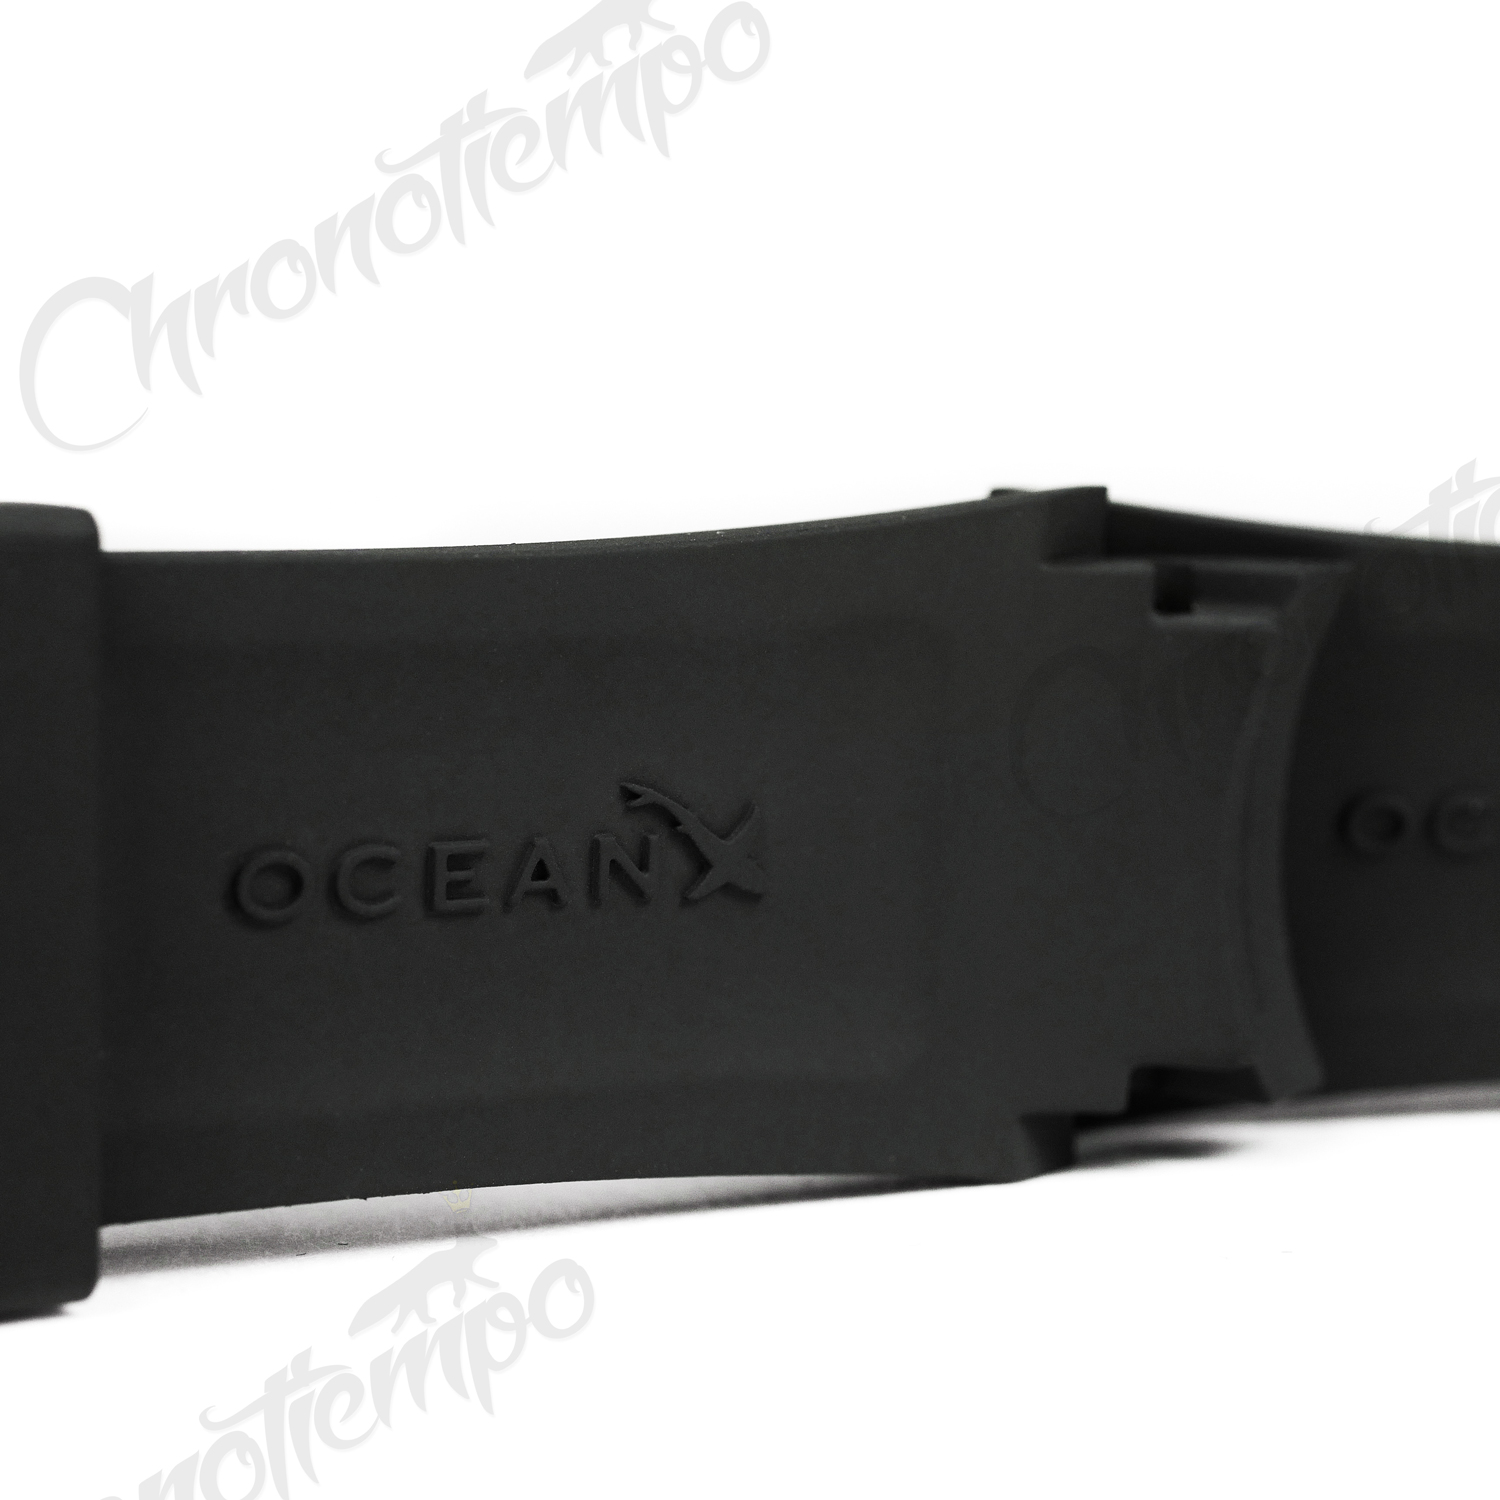 OceanX 21mm Black Rubber Strap for Sharkmaster 1000,M9,300+,bronze,bronze m9,600 44mm